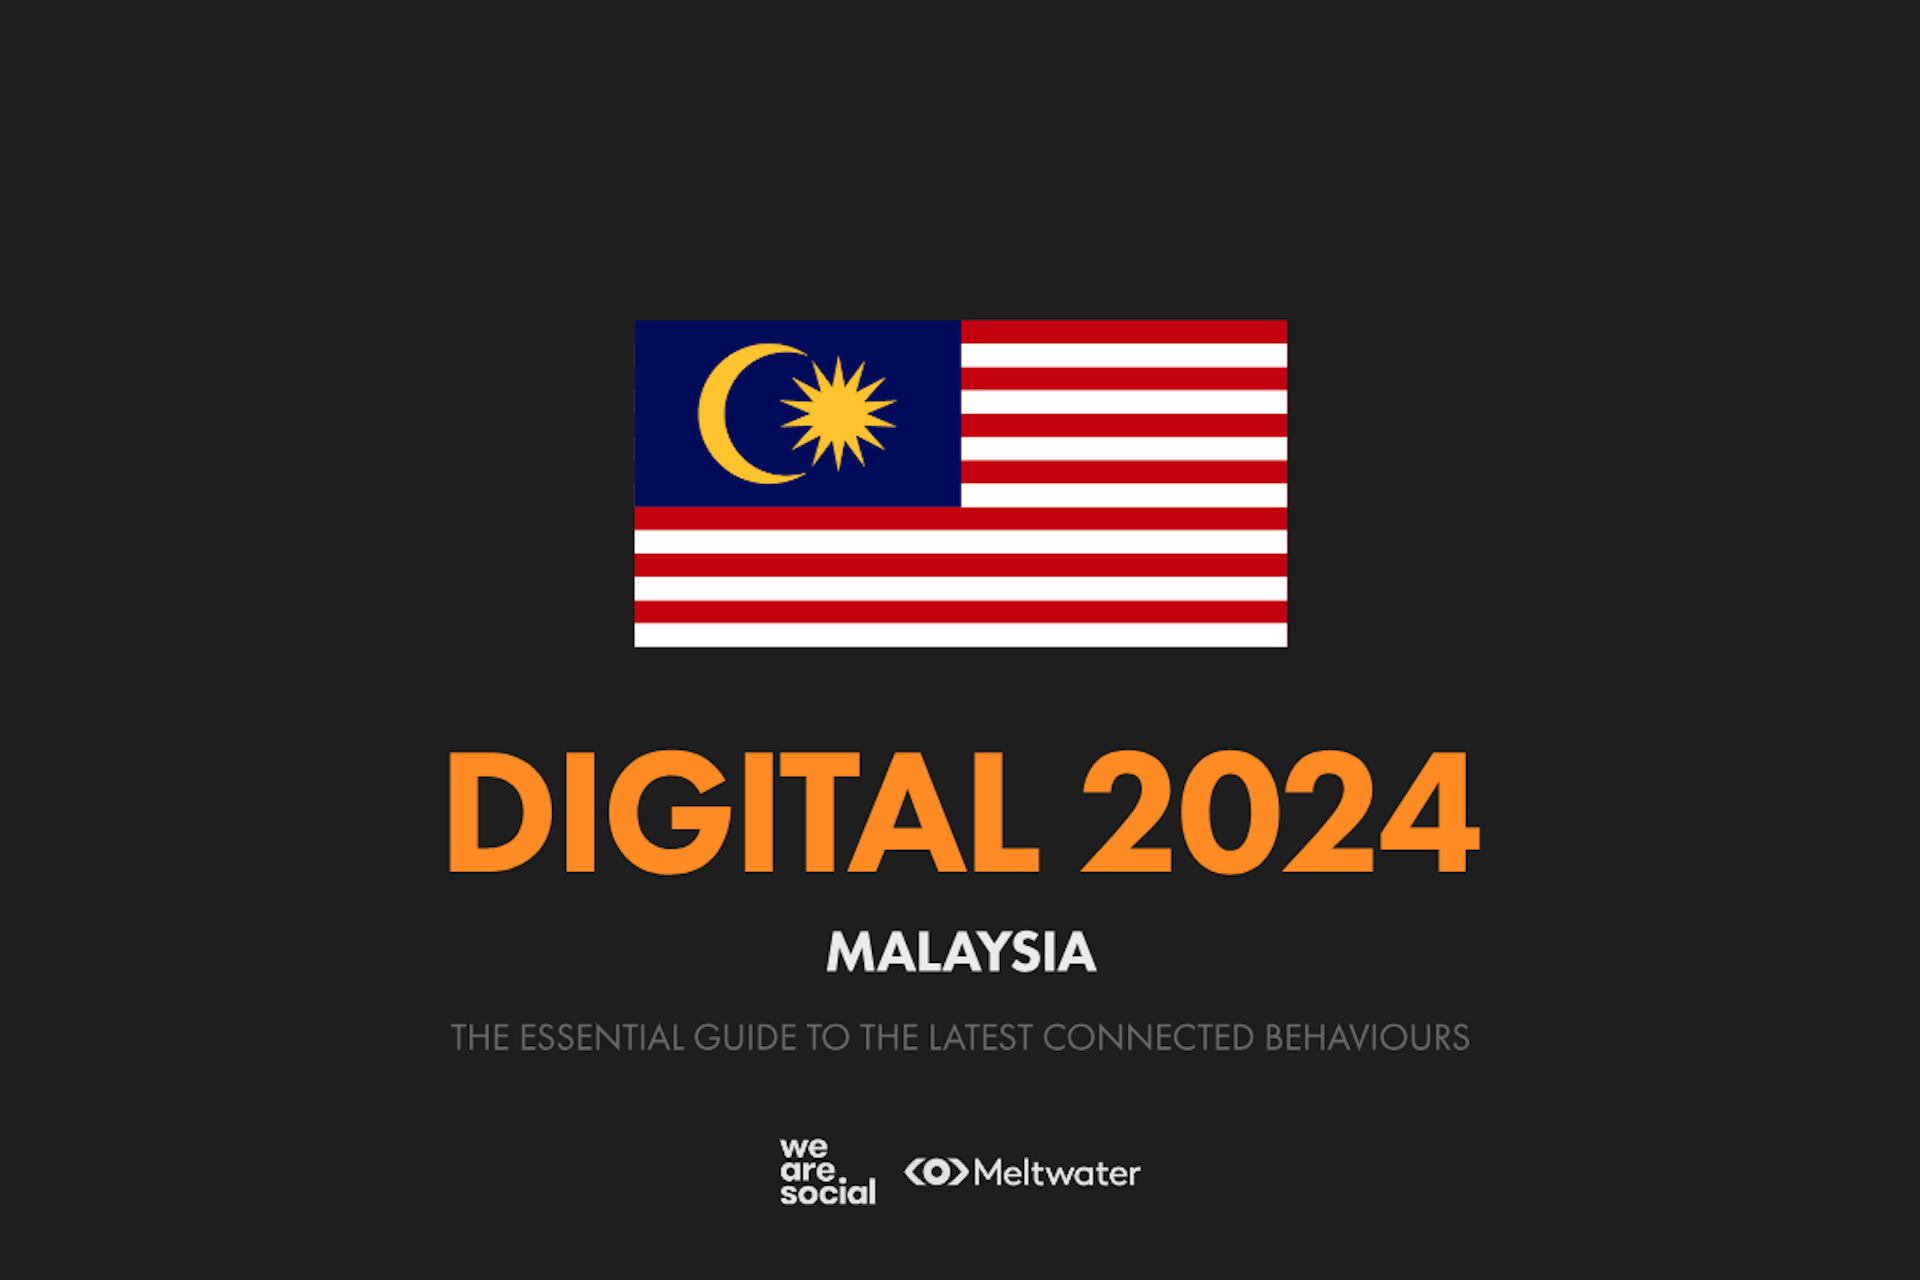 Global Digital Report 2024 for Malaysia